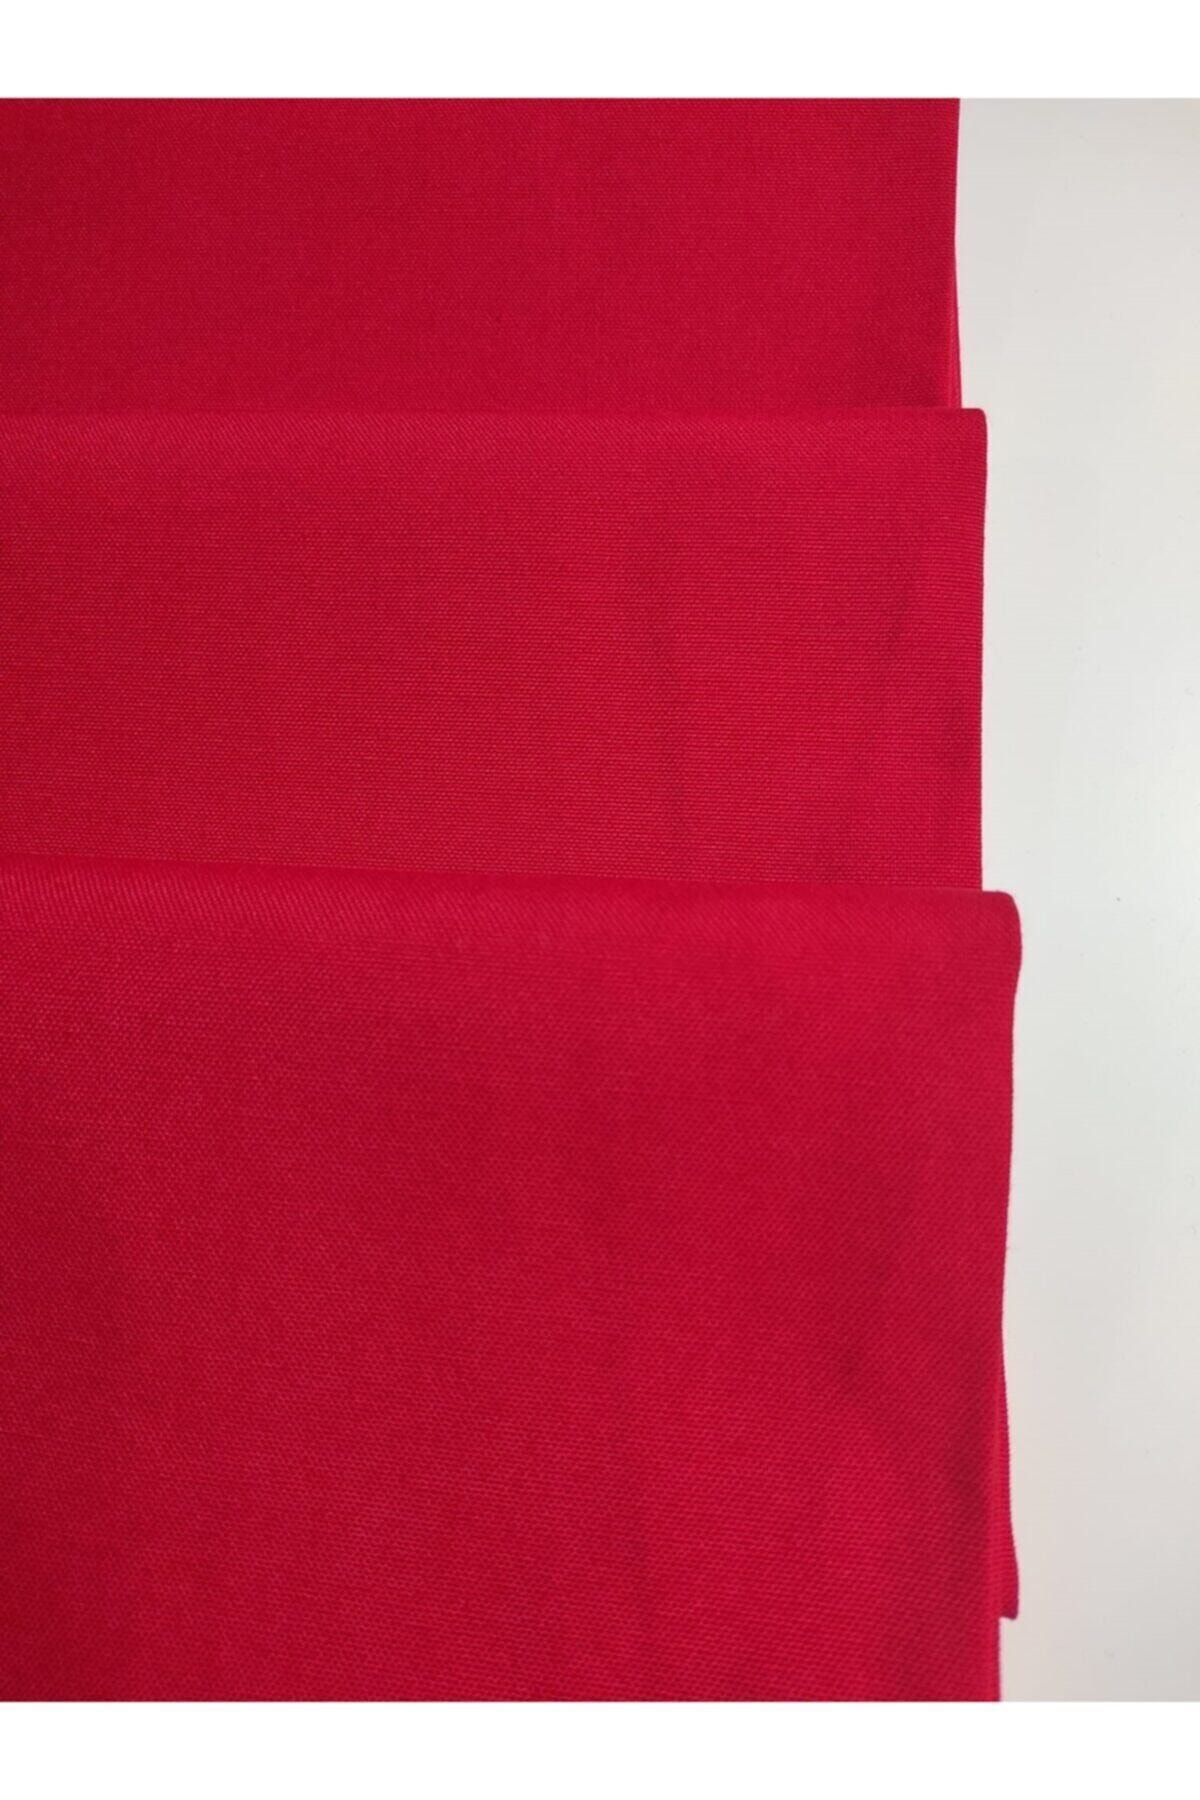 fabricorg Duck Bezi Punch Keten Kumaşı Bayrak Kırmızısı (50X180 CM)